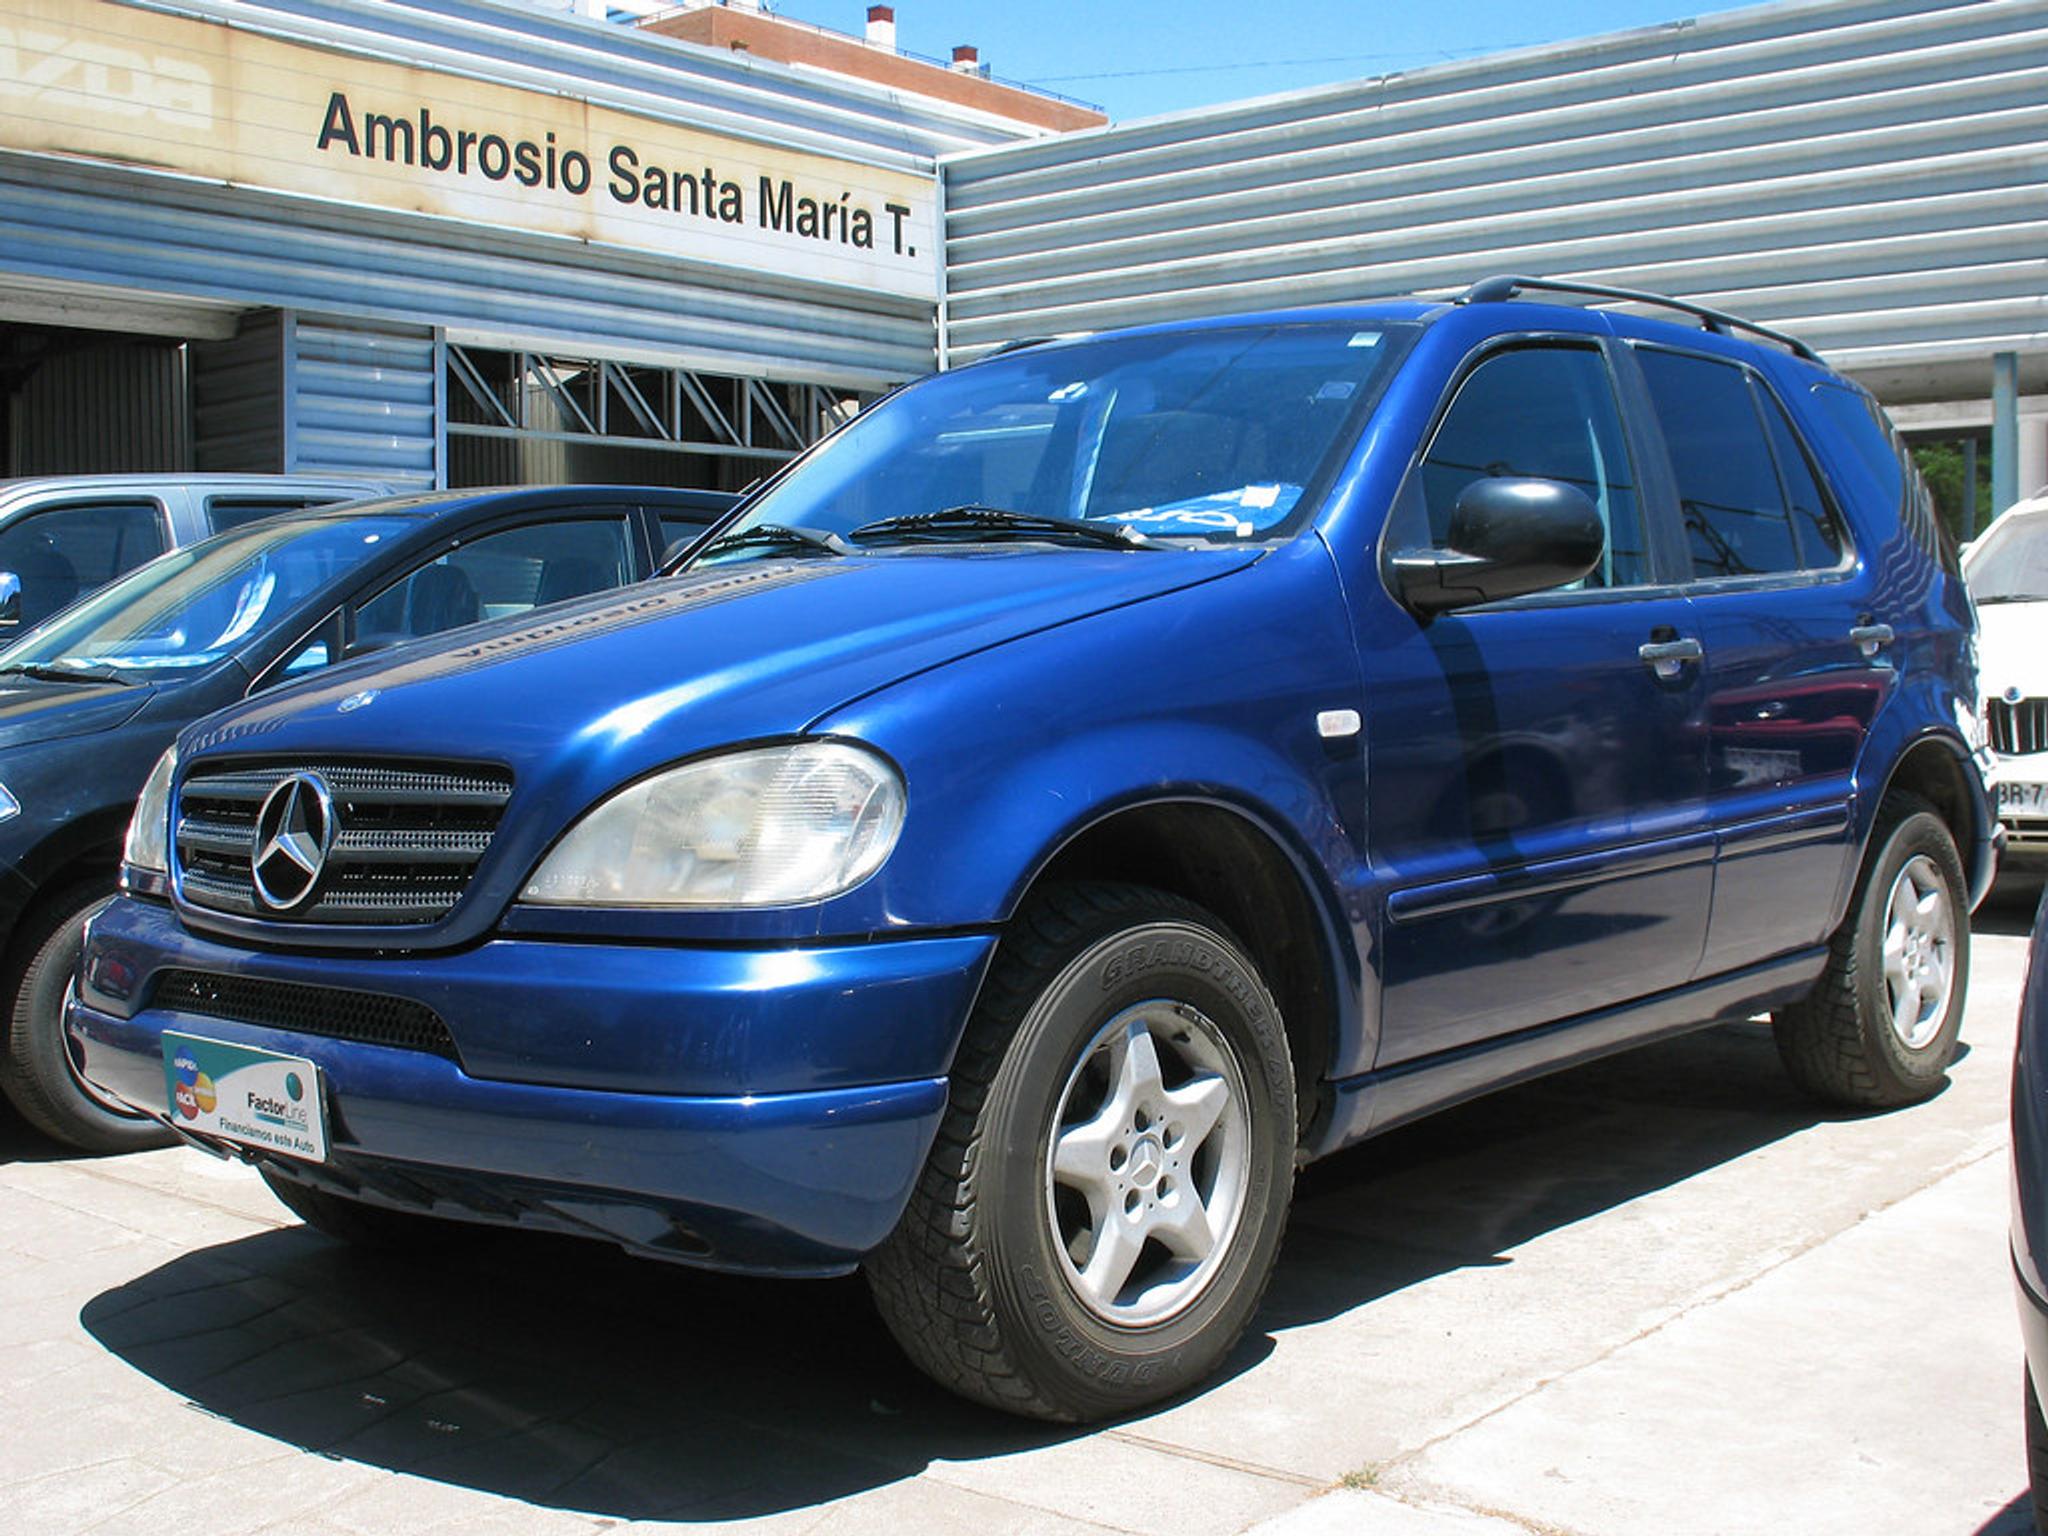 mercedes-benz ml, blue car, mercedes-benz, old mercedes, vehicle in a parking lot, parked car